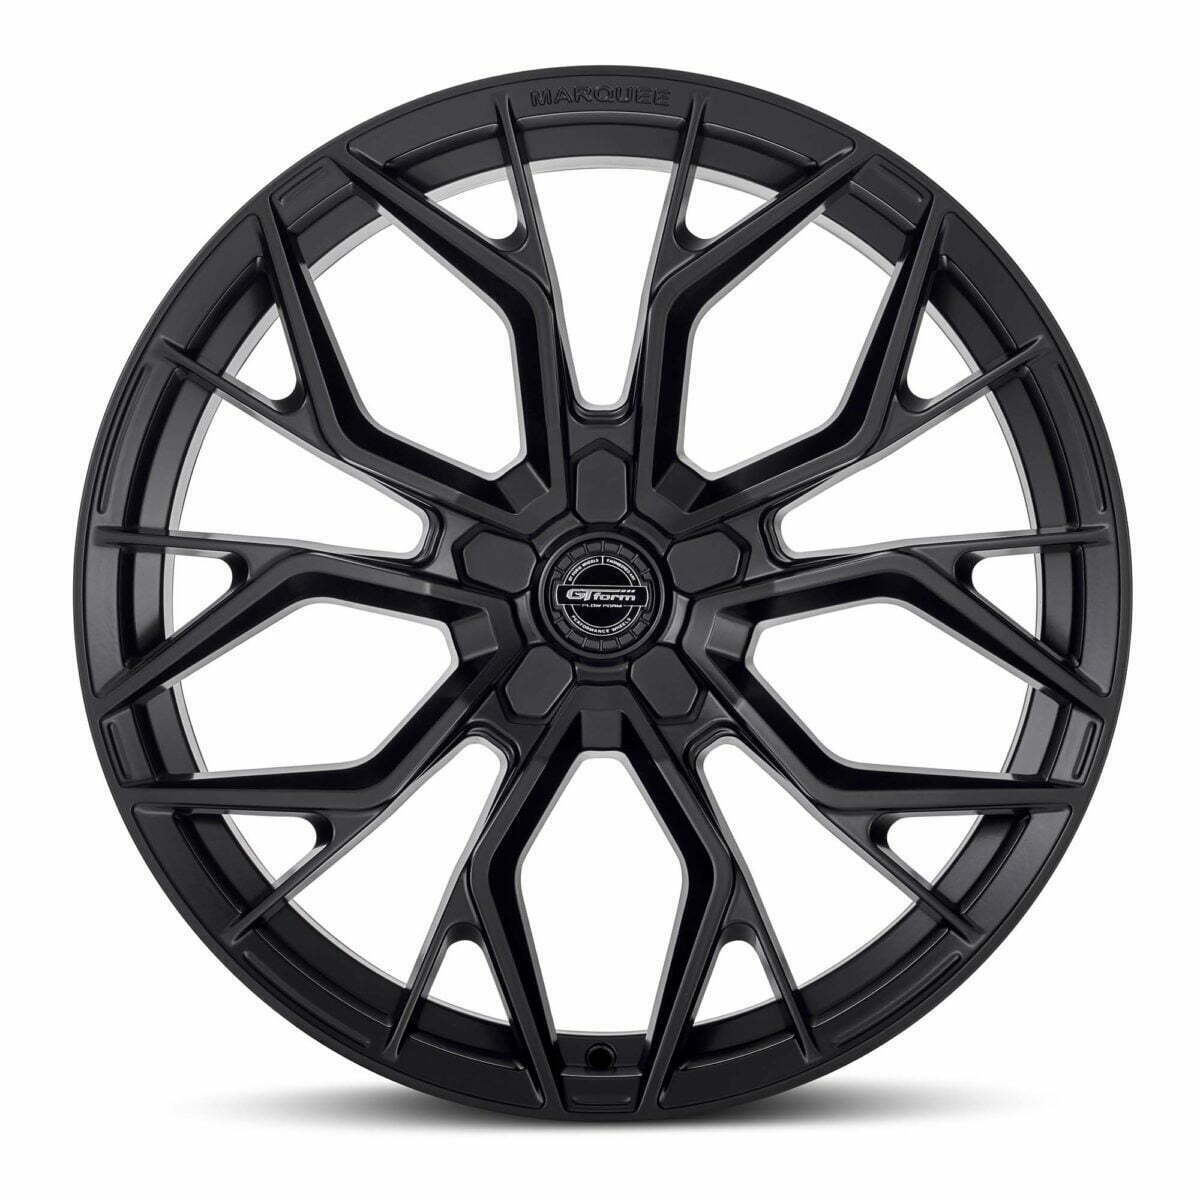 GT form Marquee Satin Black Wheels Performance Rims